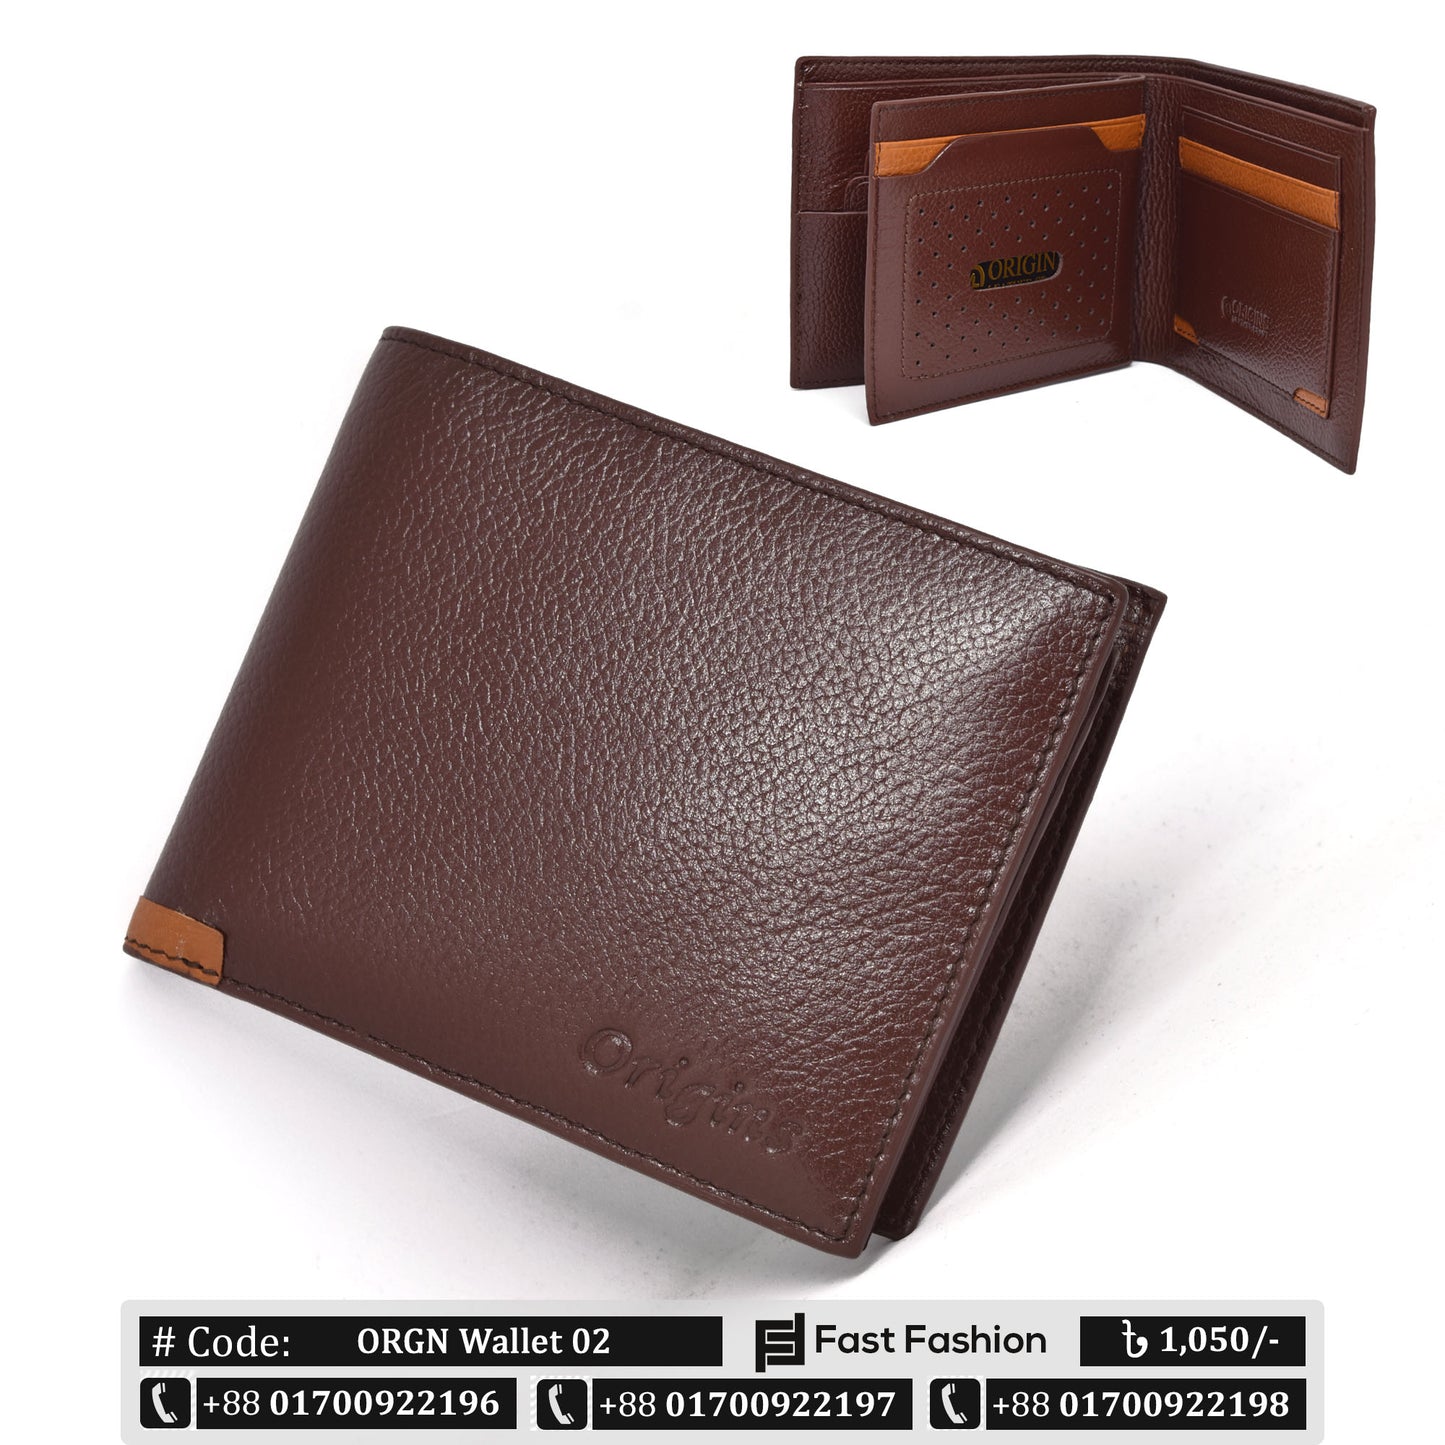 3 Part Pocket Size Premium Quality Leather Wallet for Men | ORGN Wallet 02